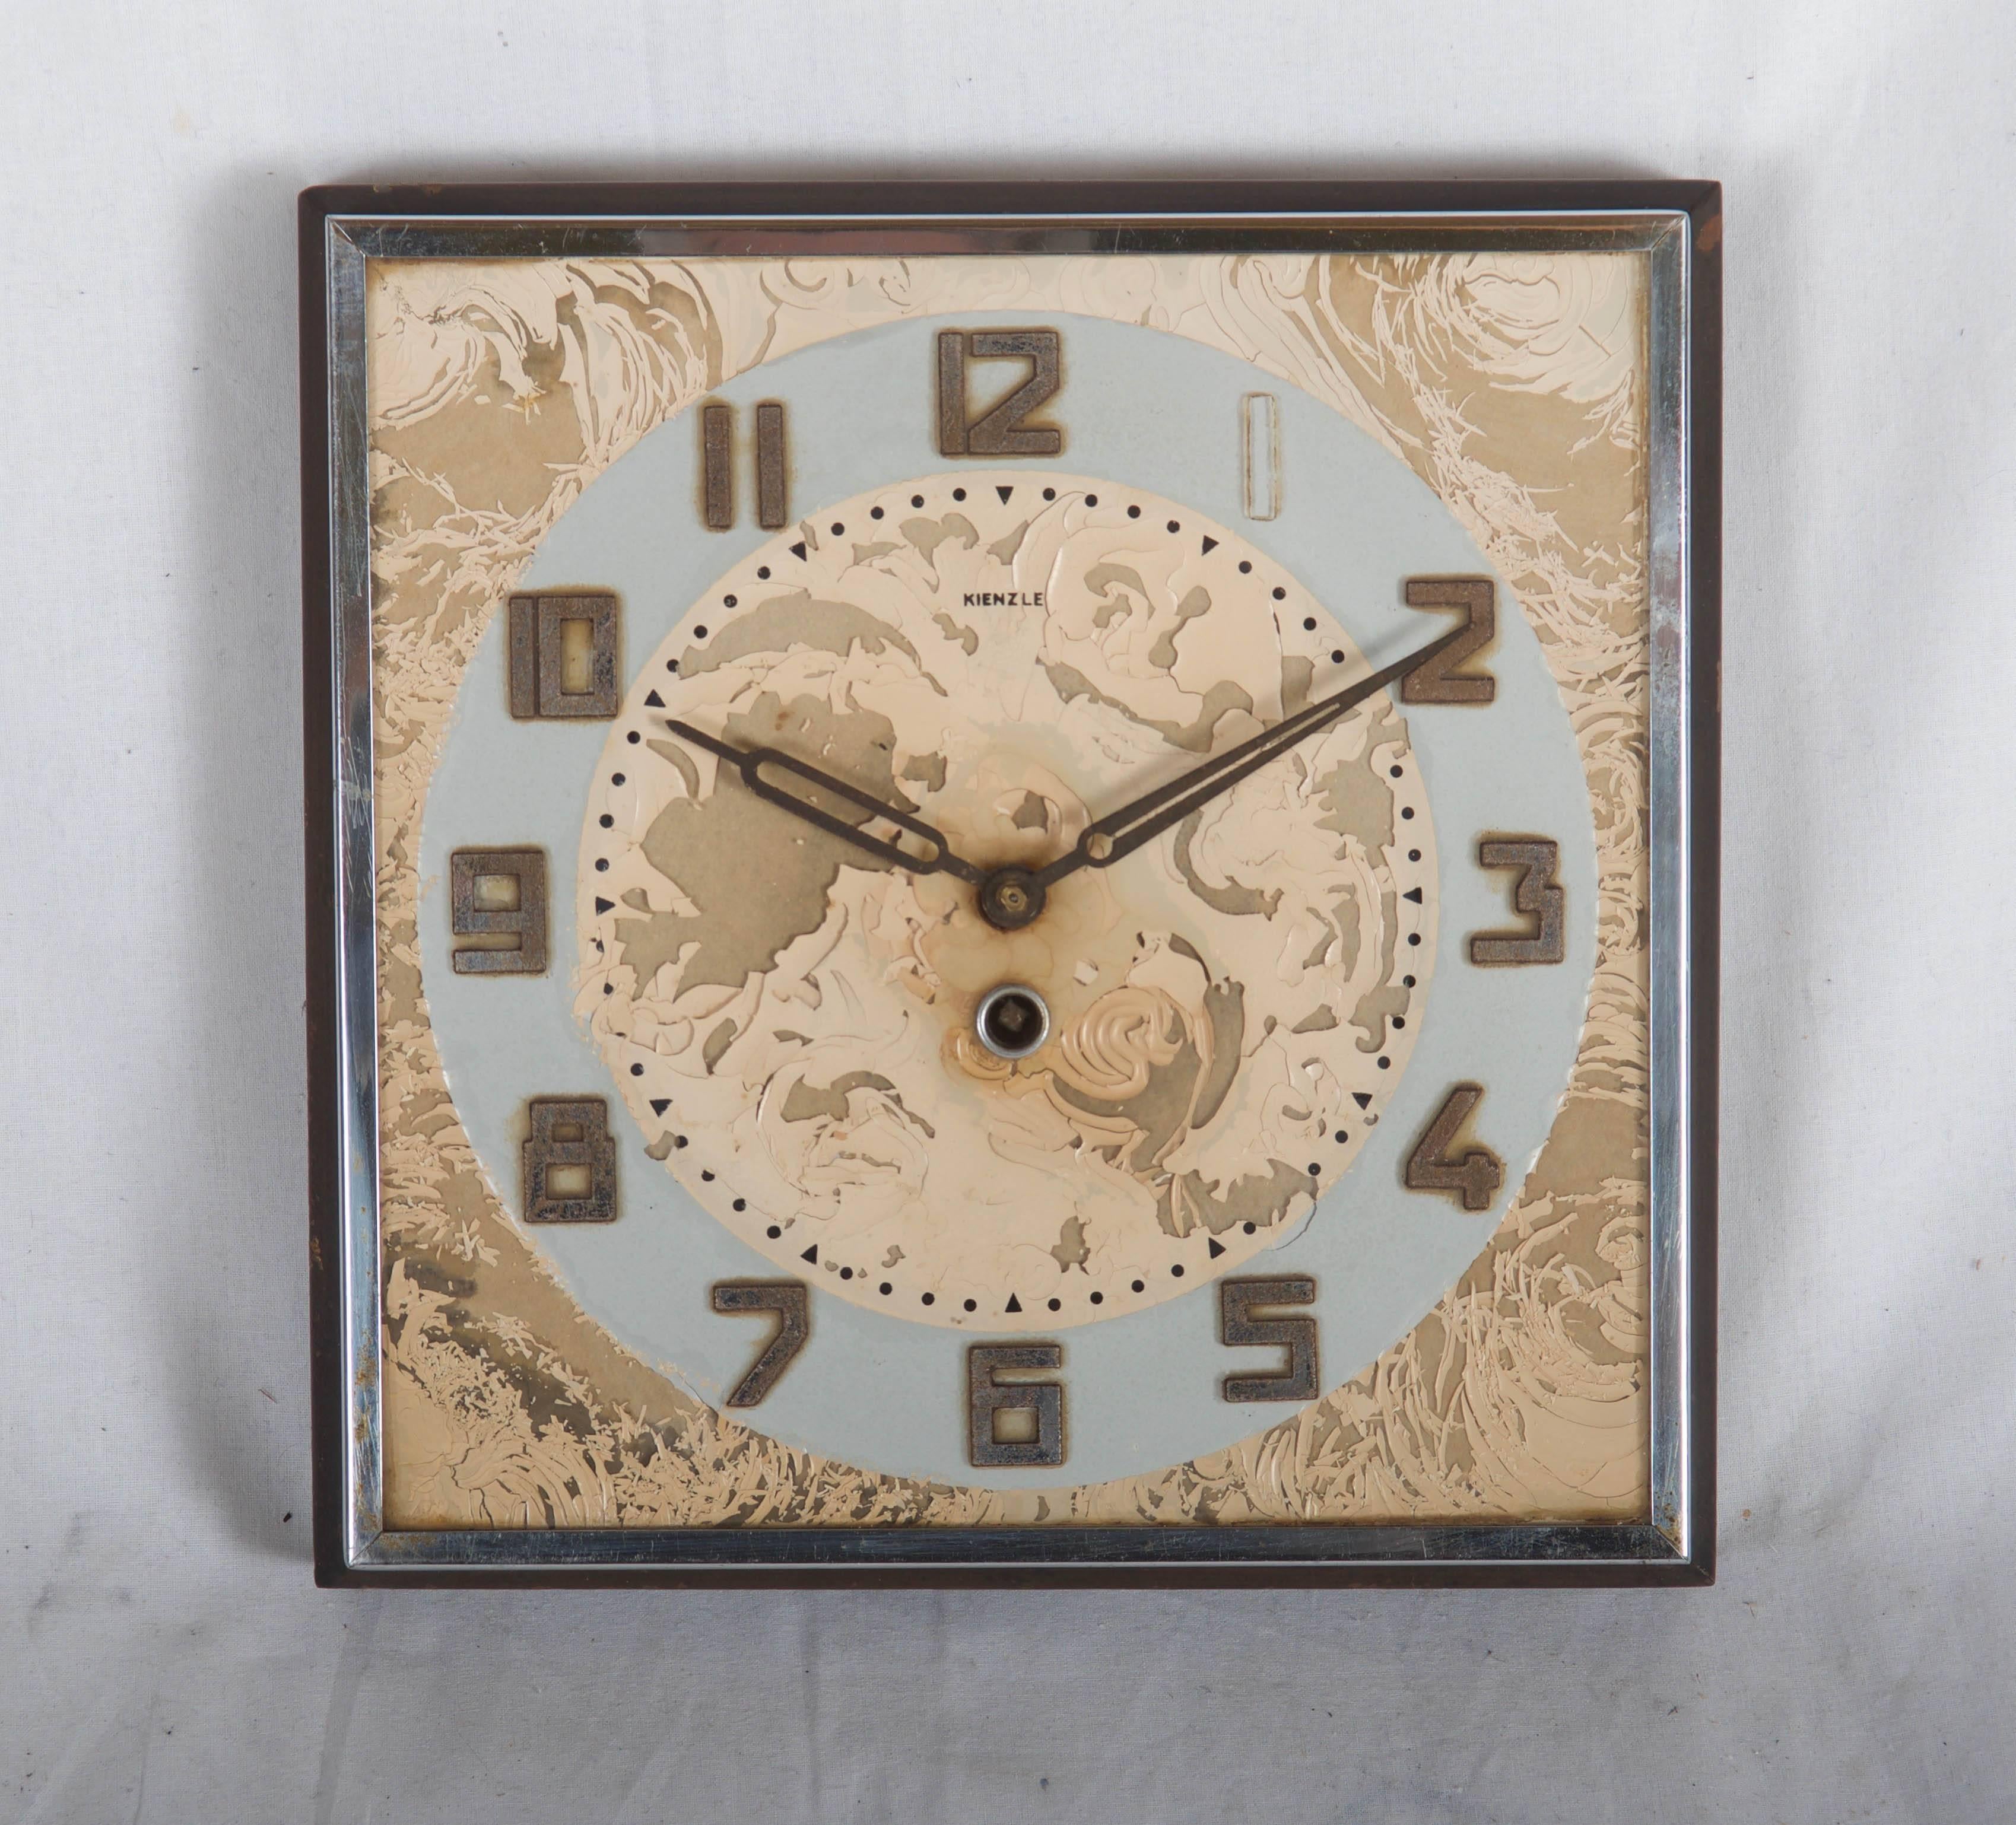 Bauhaus Kienzle Wall Clock from the 1920s